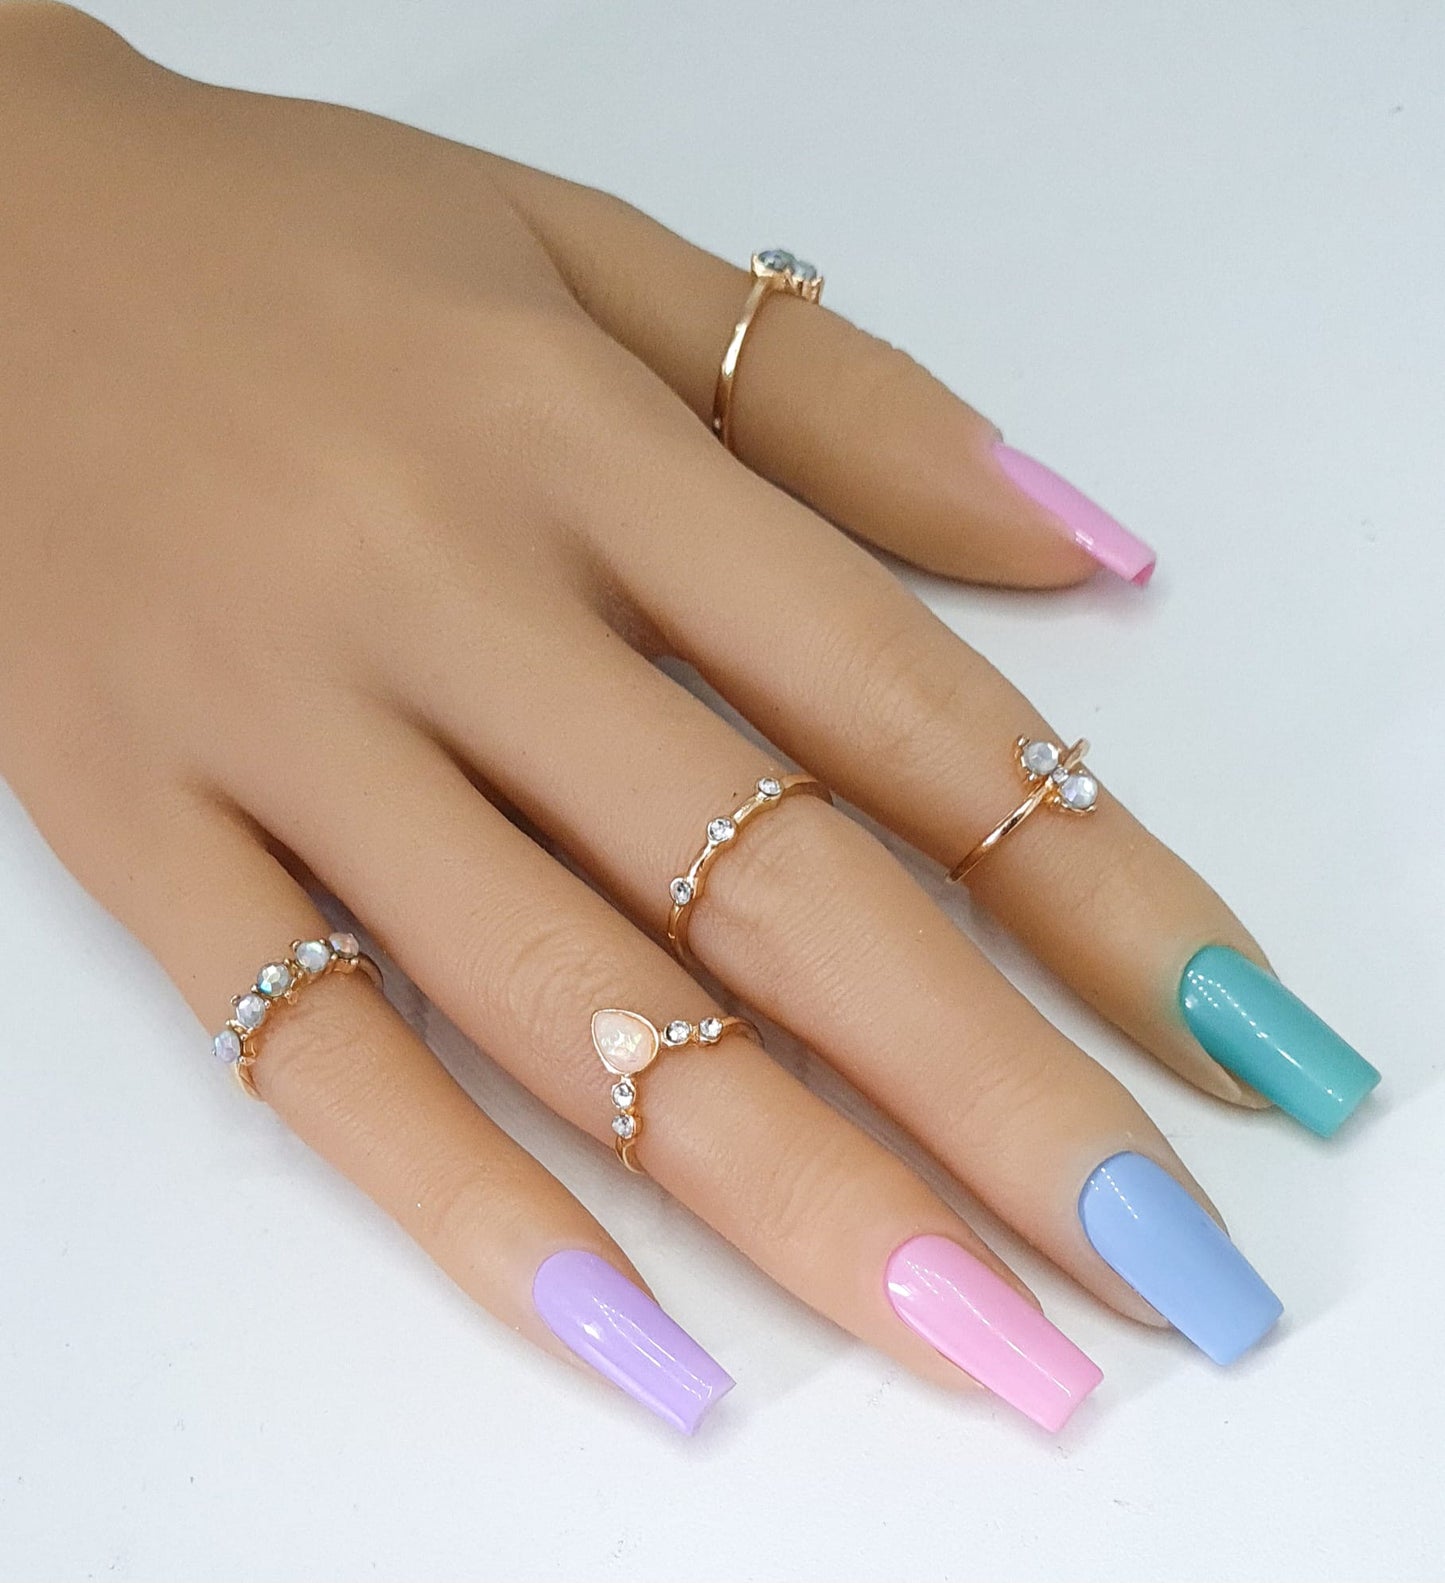 false nails medium square nails shape in multicolour pastel shades